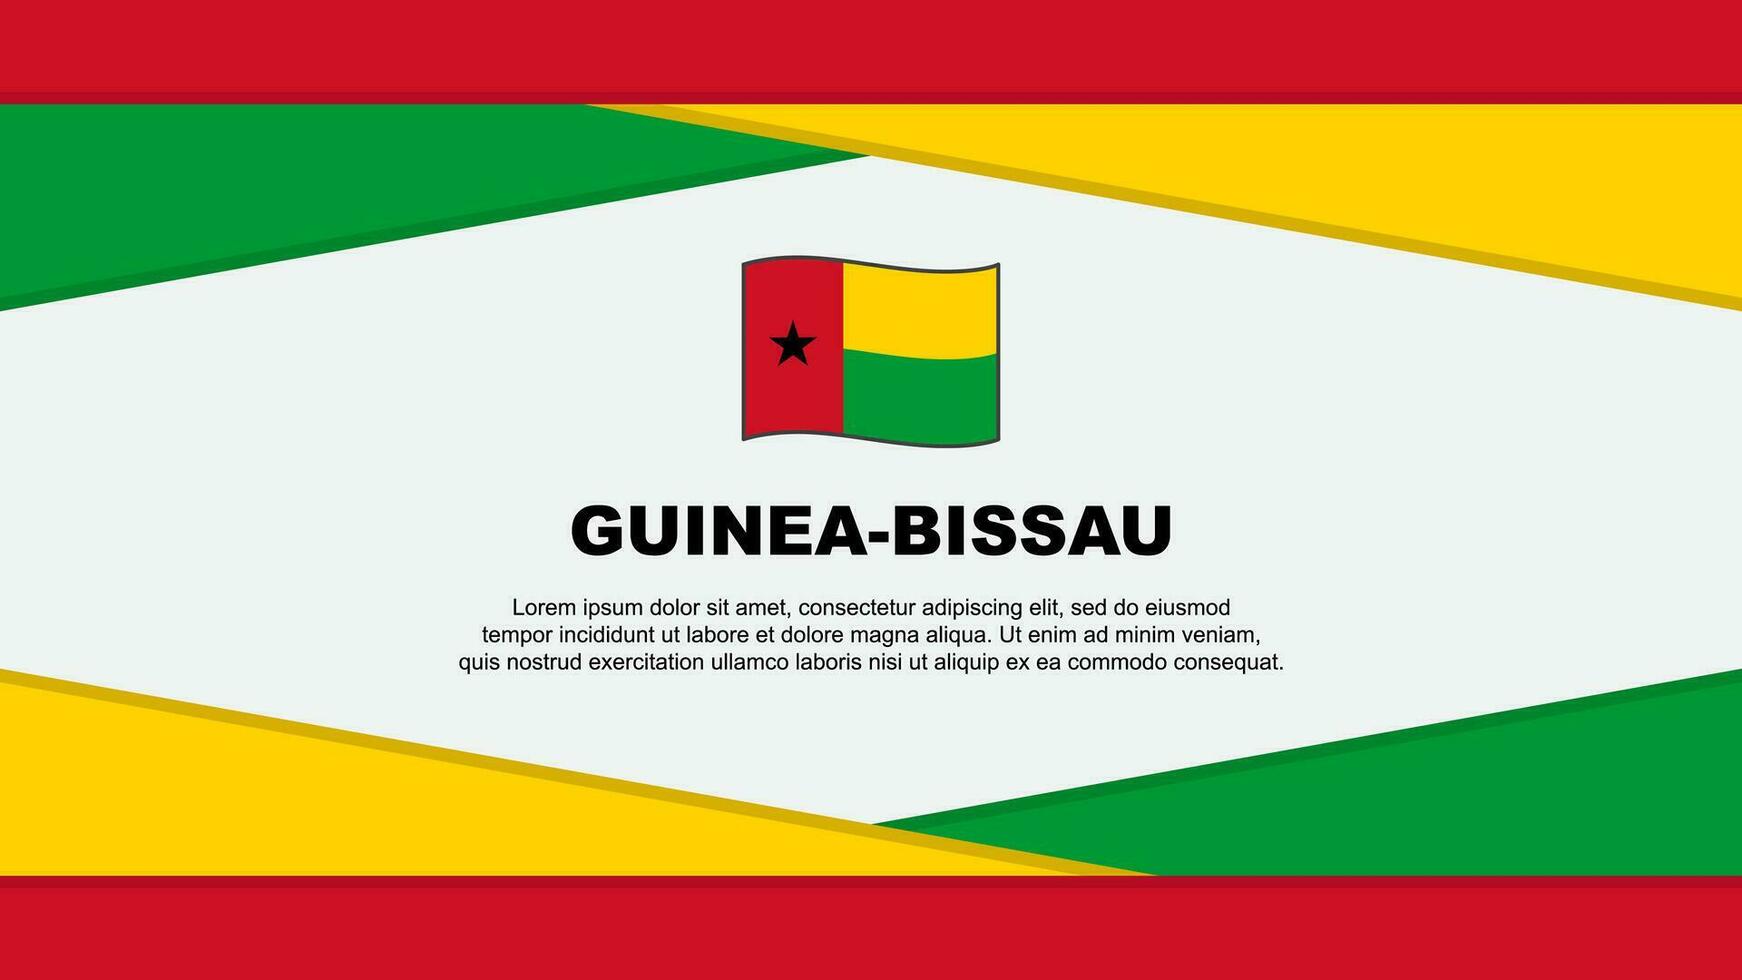 Guinea-Bissau Flag Abstract Background Design Template. Guinea-Bissau Independence Day Banner Cartoon Vector Illustration. Guinea-Bissau Vector